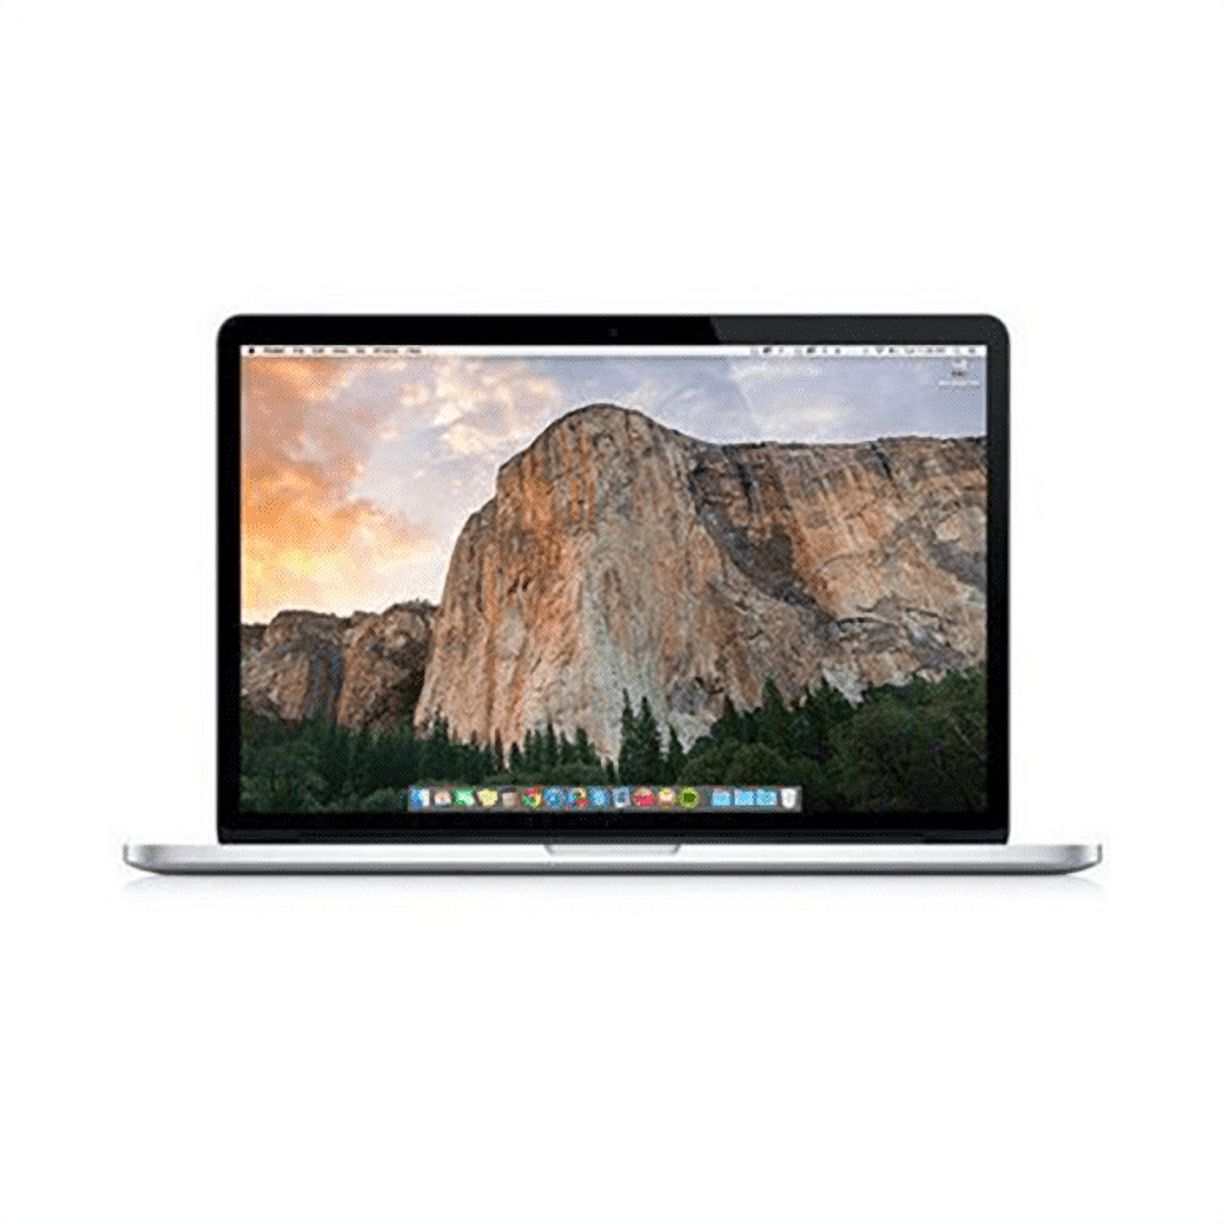 Restored Apple Macbook Pro 15